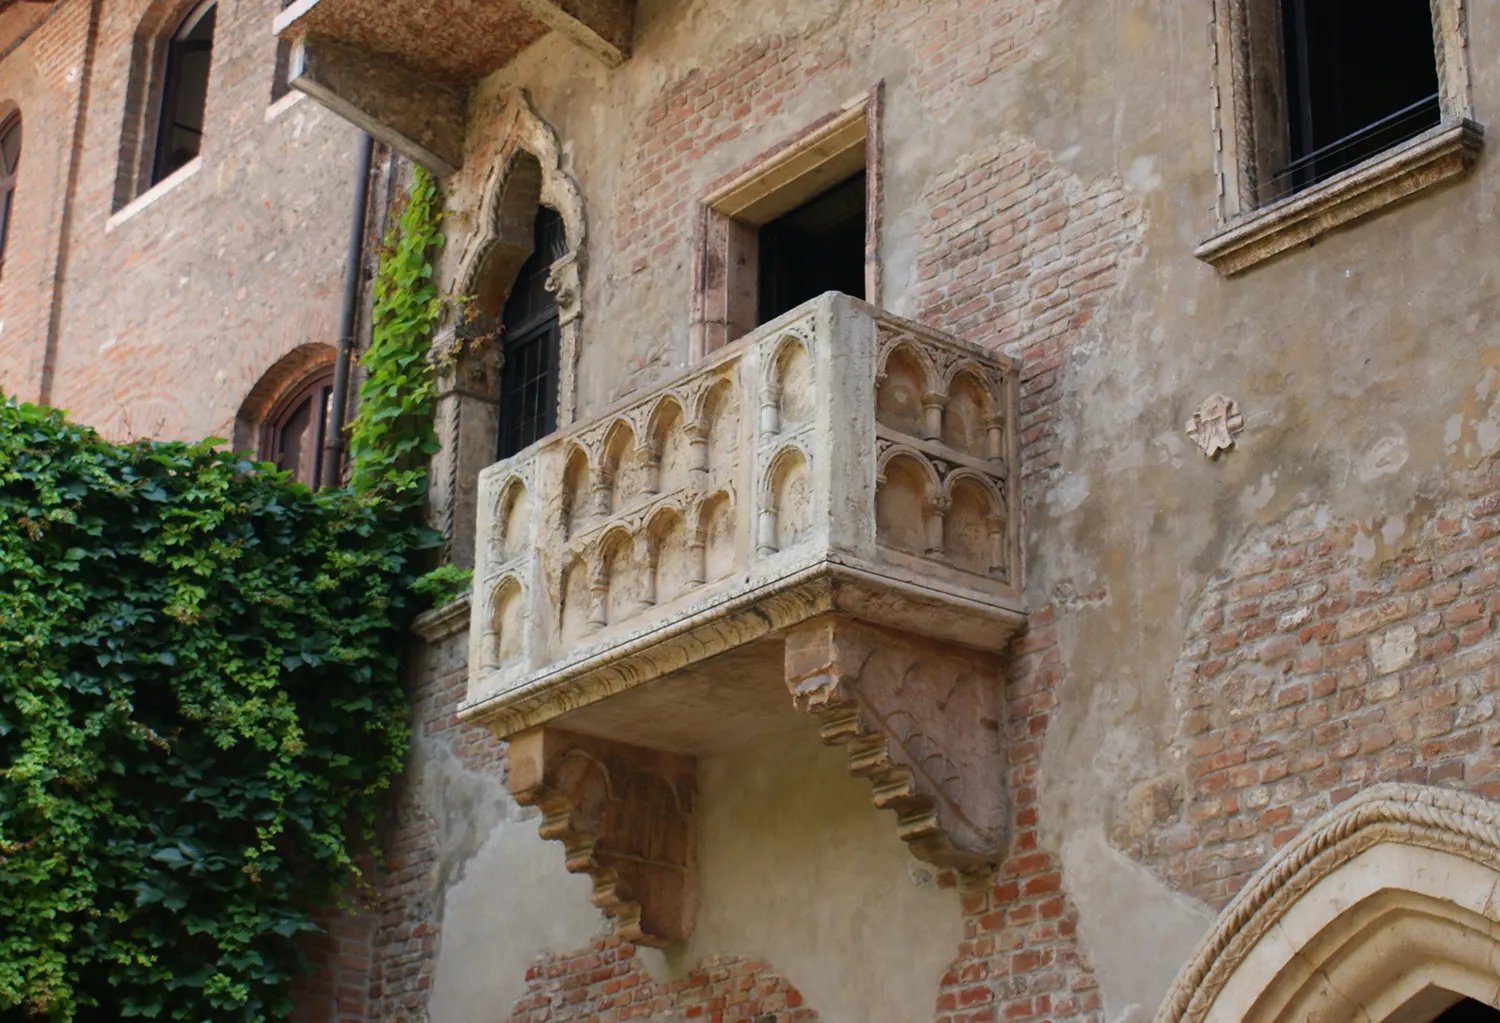 THE BALCONY OF JULIET’S HOUSE IN VERONA, ITALY.